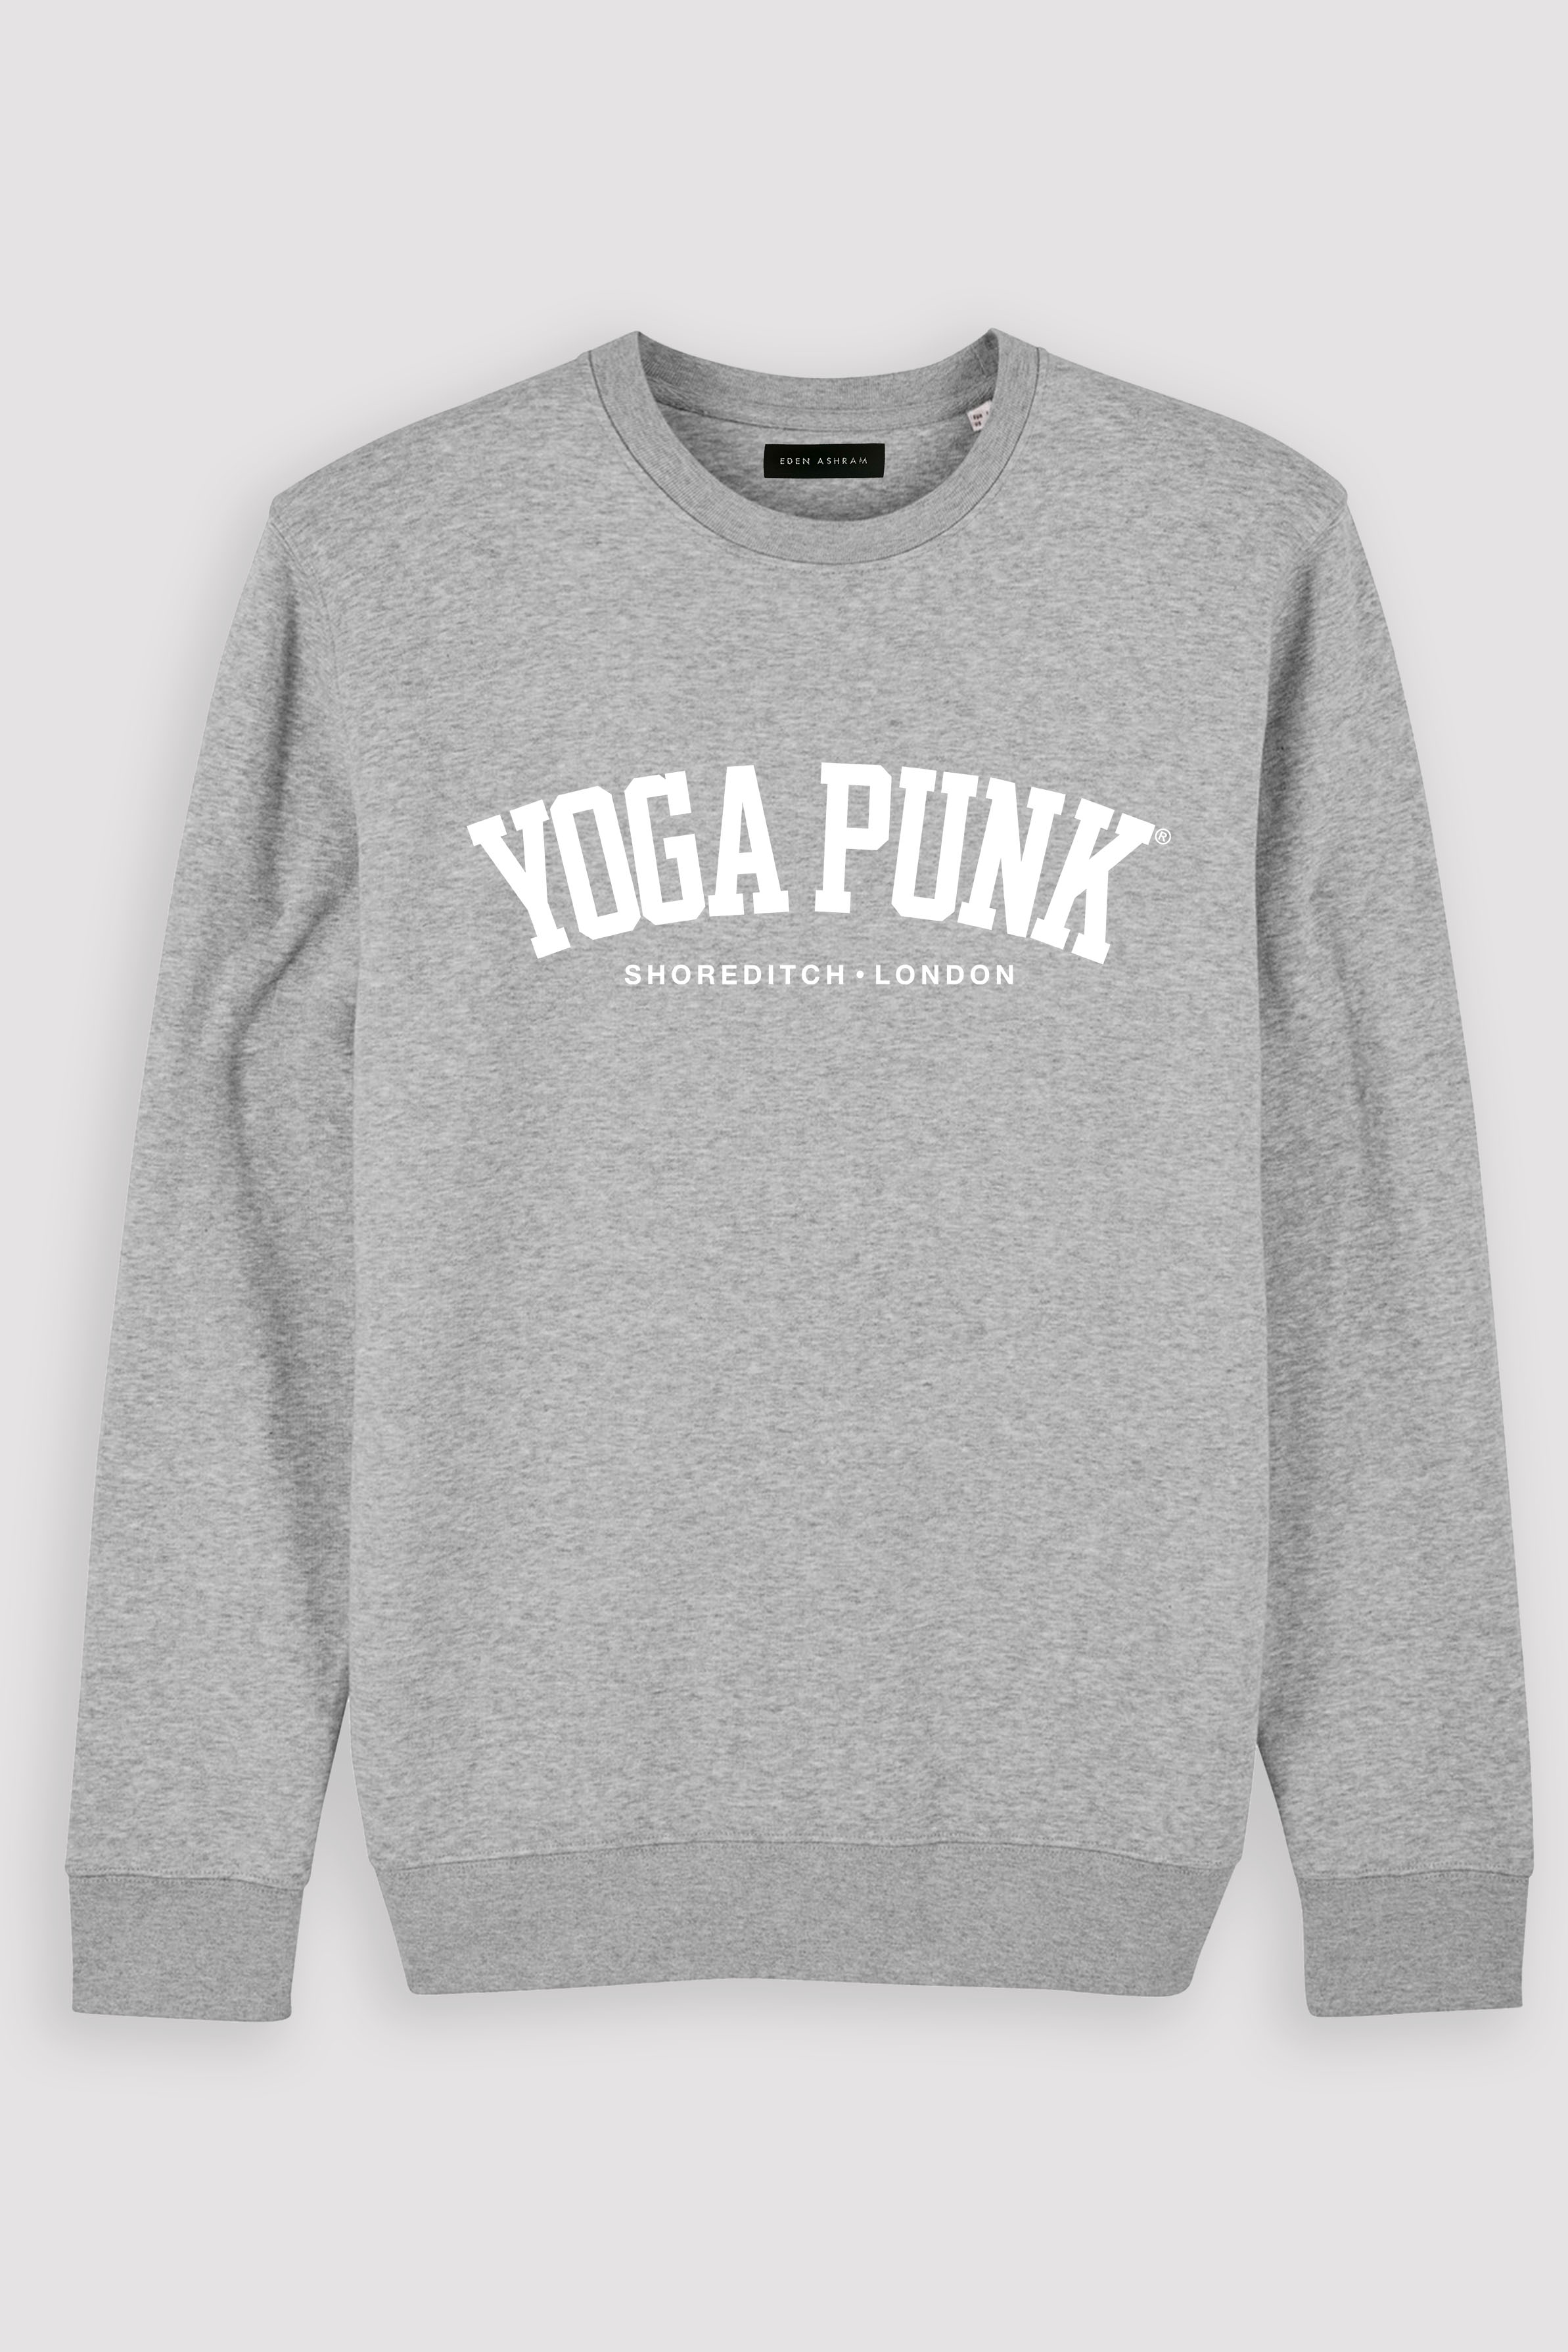 EDEN ASHRAM Yoga Punk Premium Crew Neck Sweatshirt Heather Grey